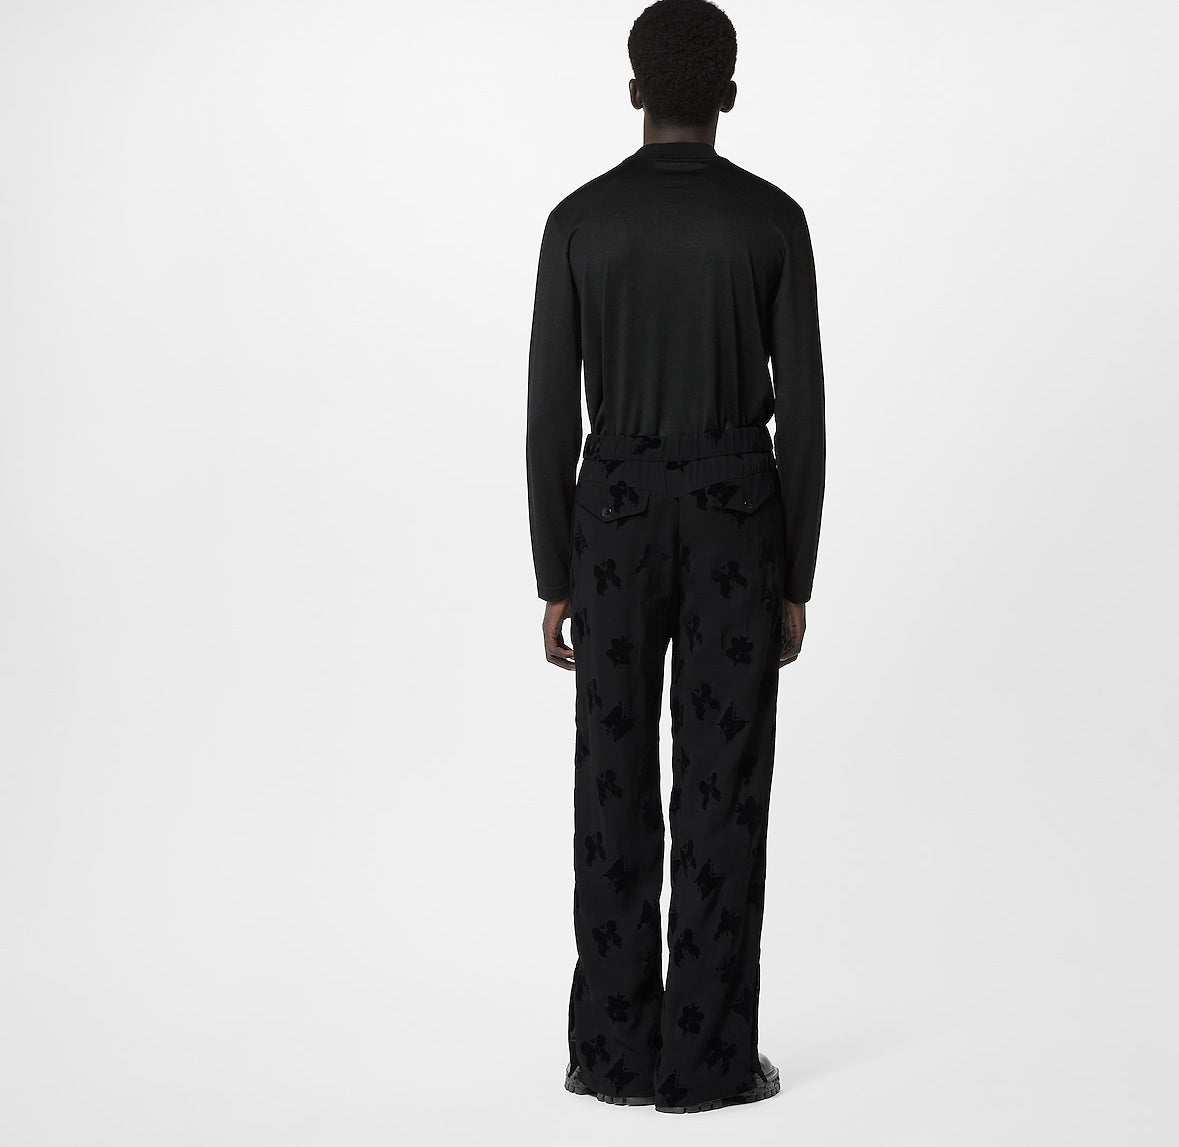 Louis Vuitton 3D Embroidered Long Sleeve T-Shirt